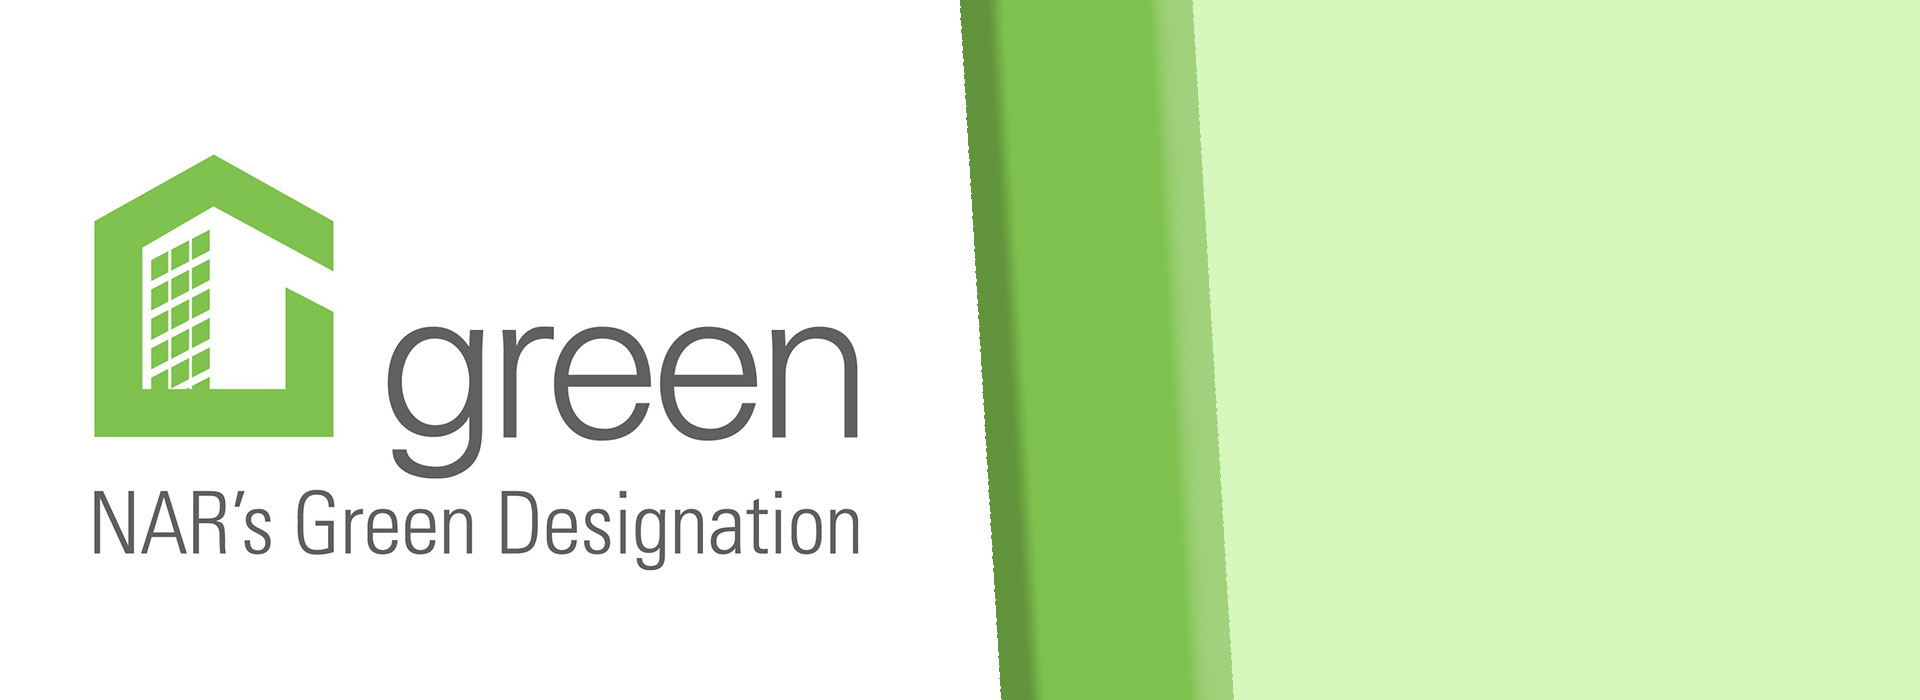 NAR Green Designation offered December 19-20th